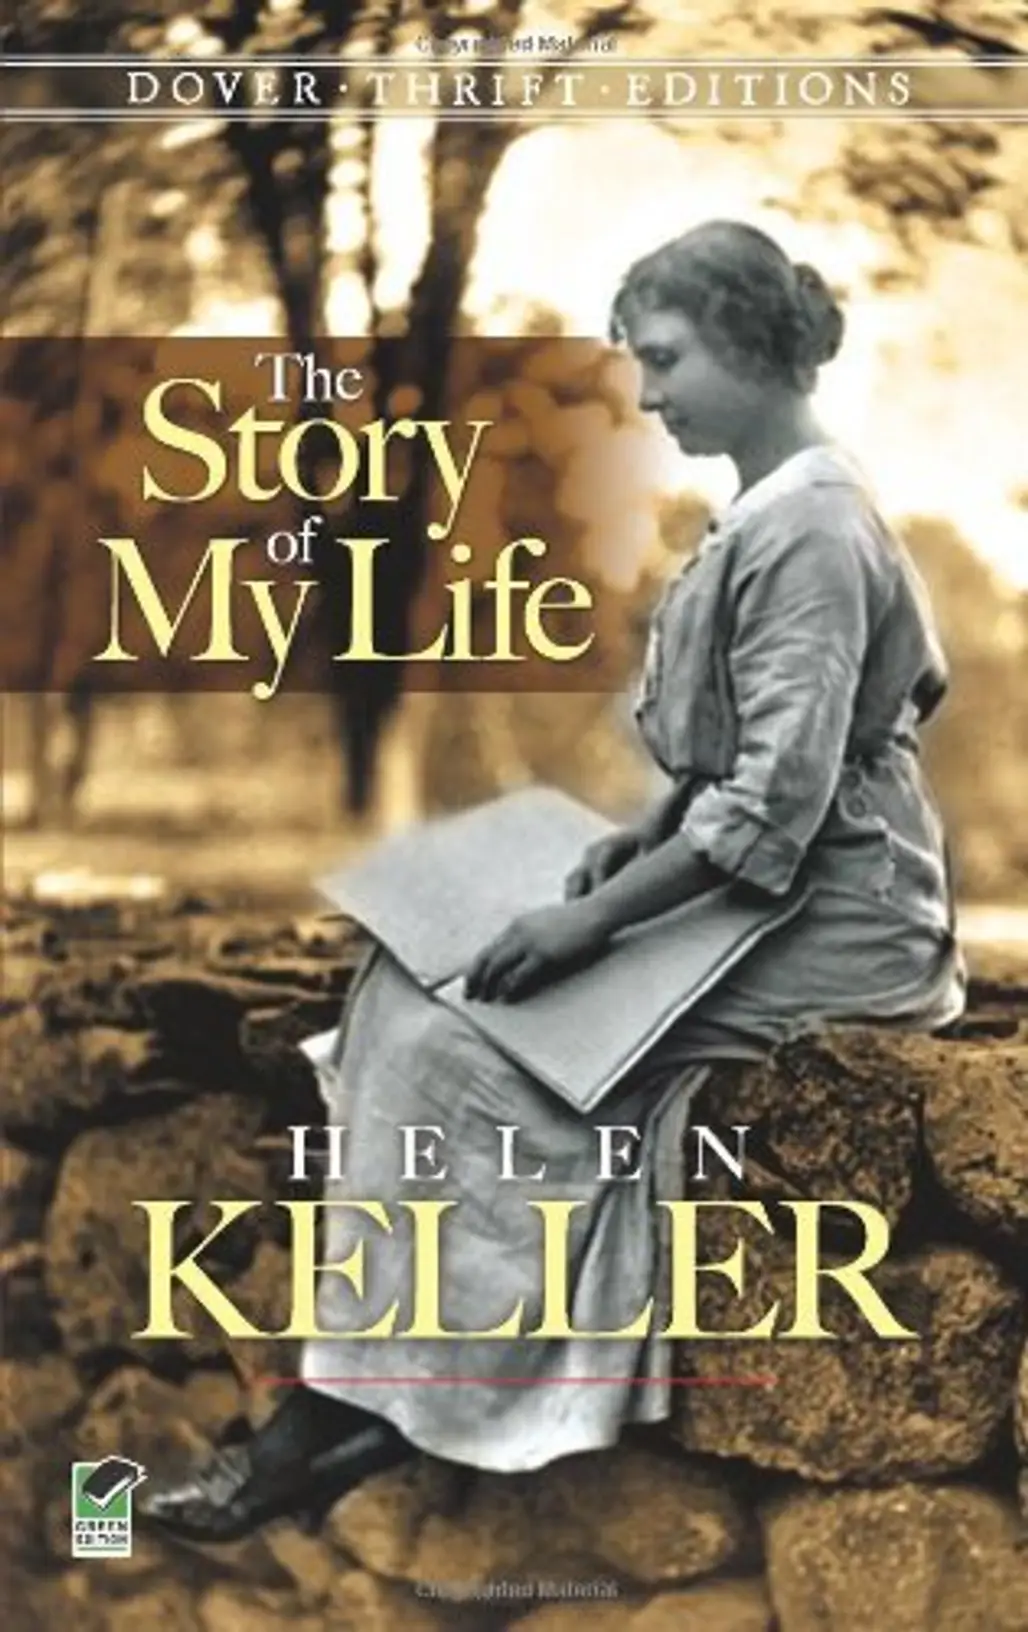 Helen Keller: the Story of My Life